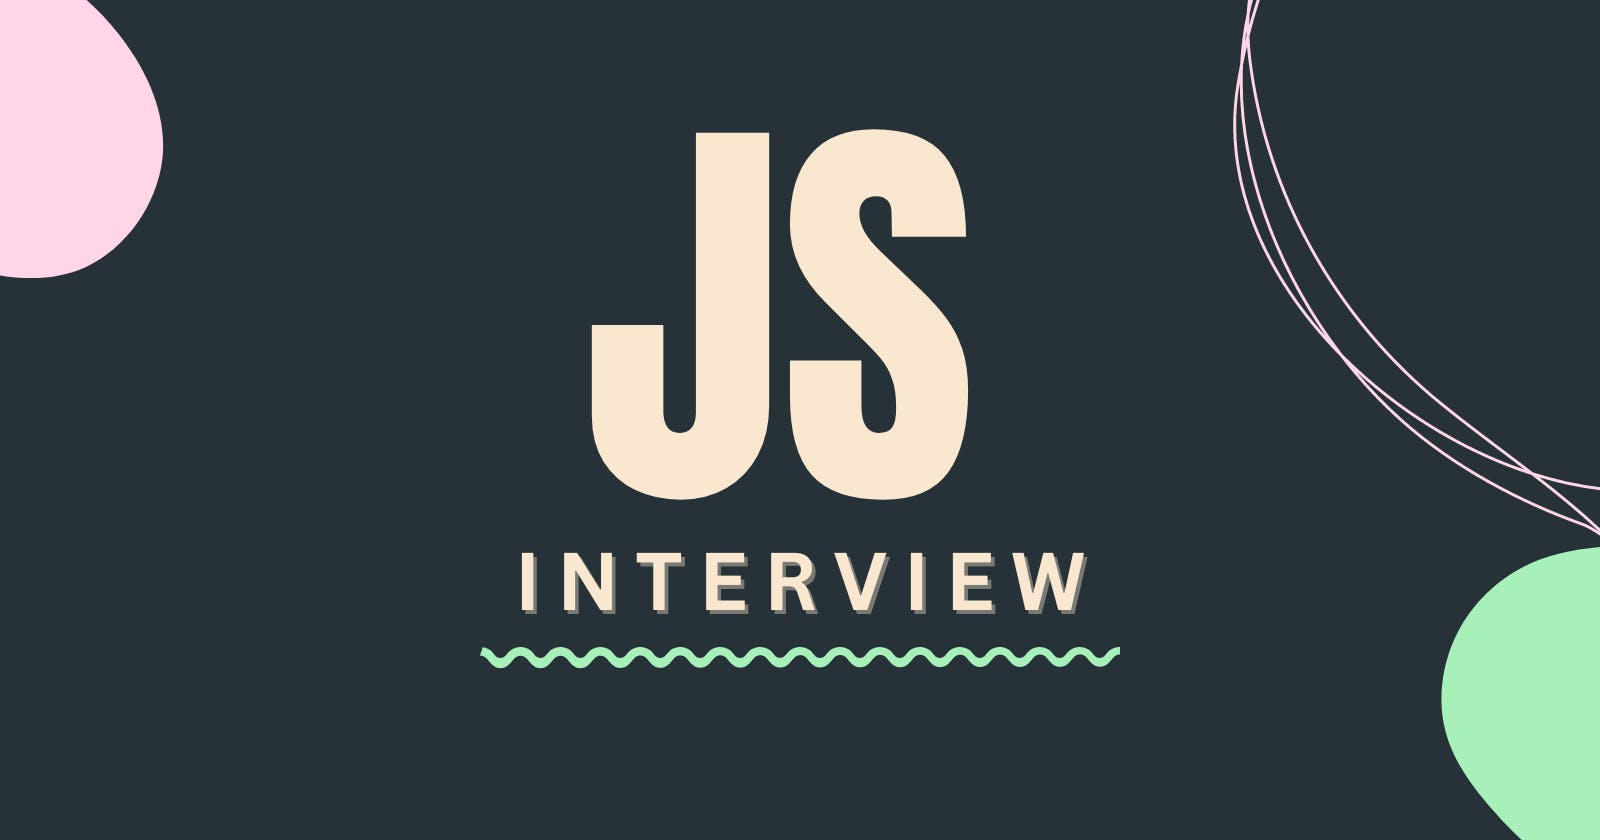 JS Interview CheatSheet